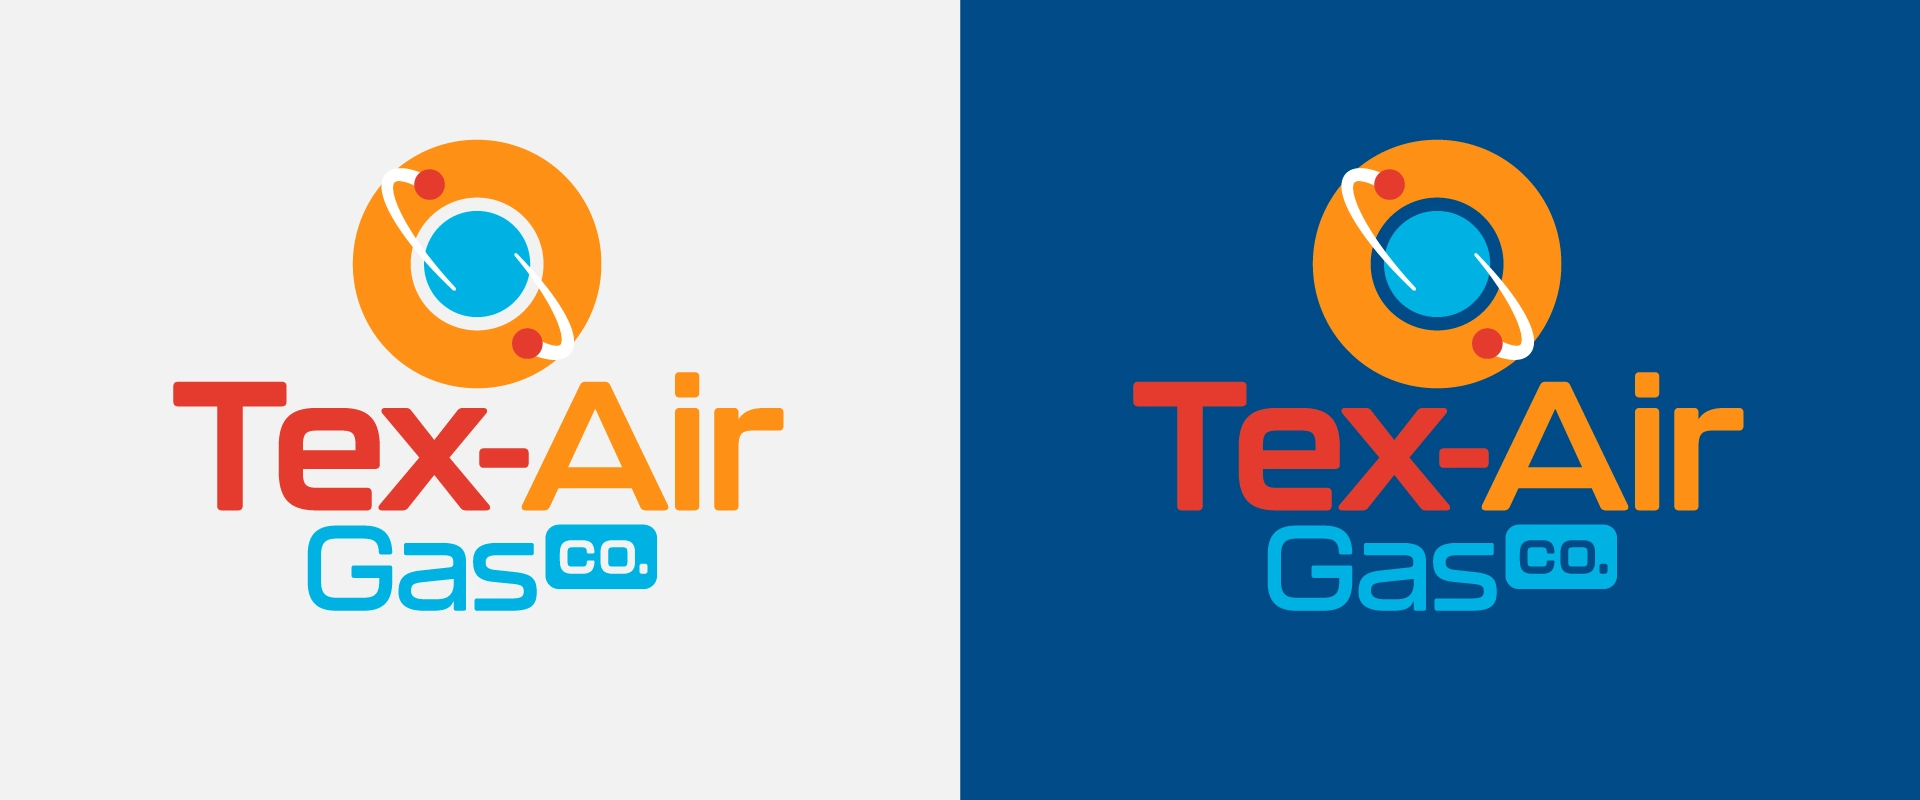 Tex-Air Gas Co. primary logos